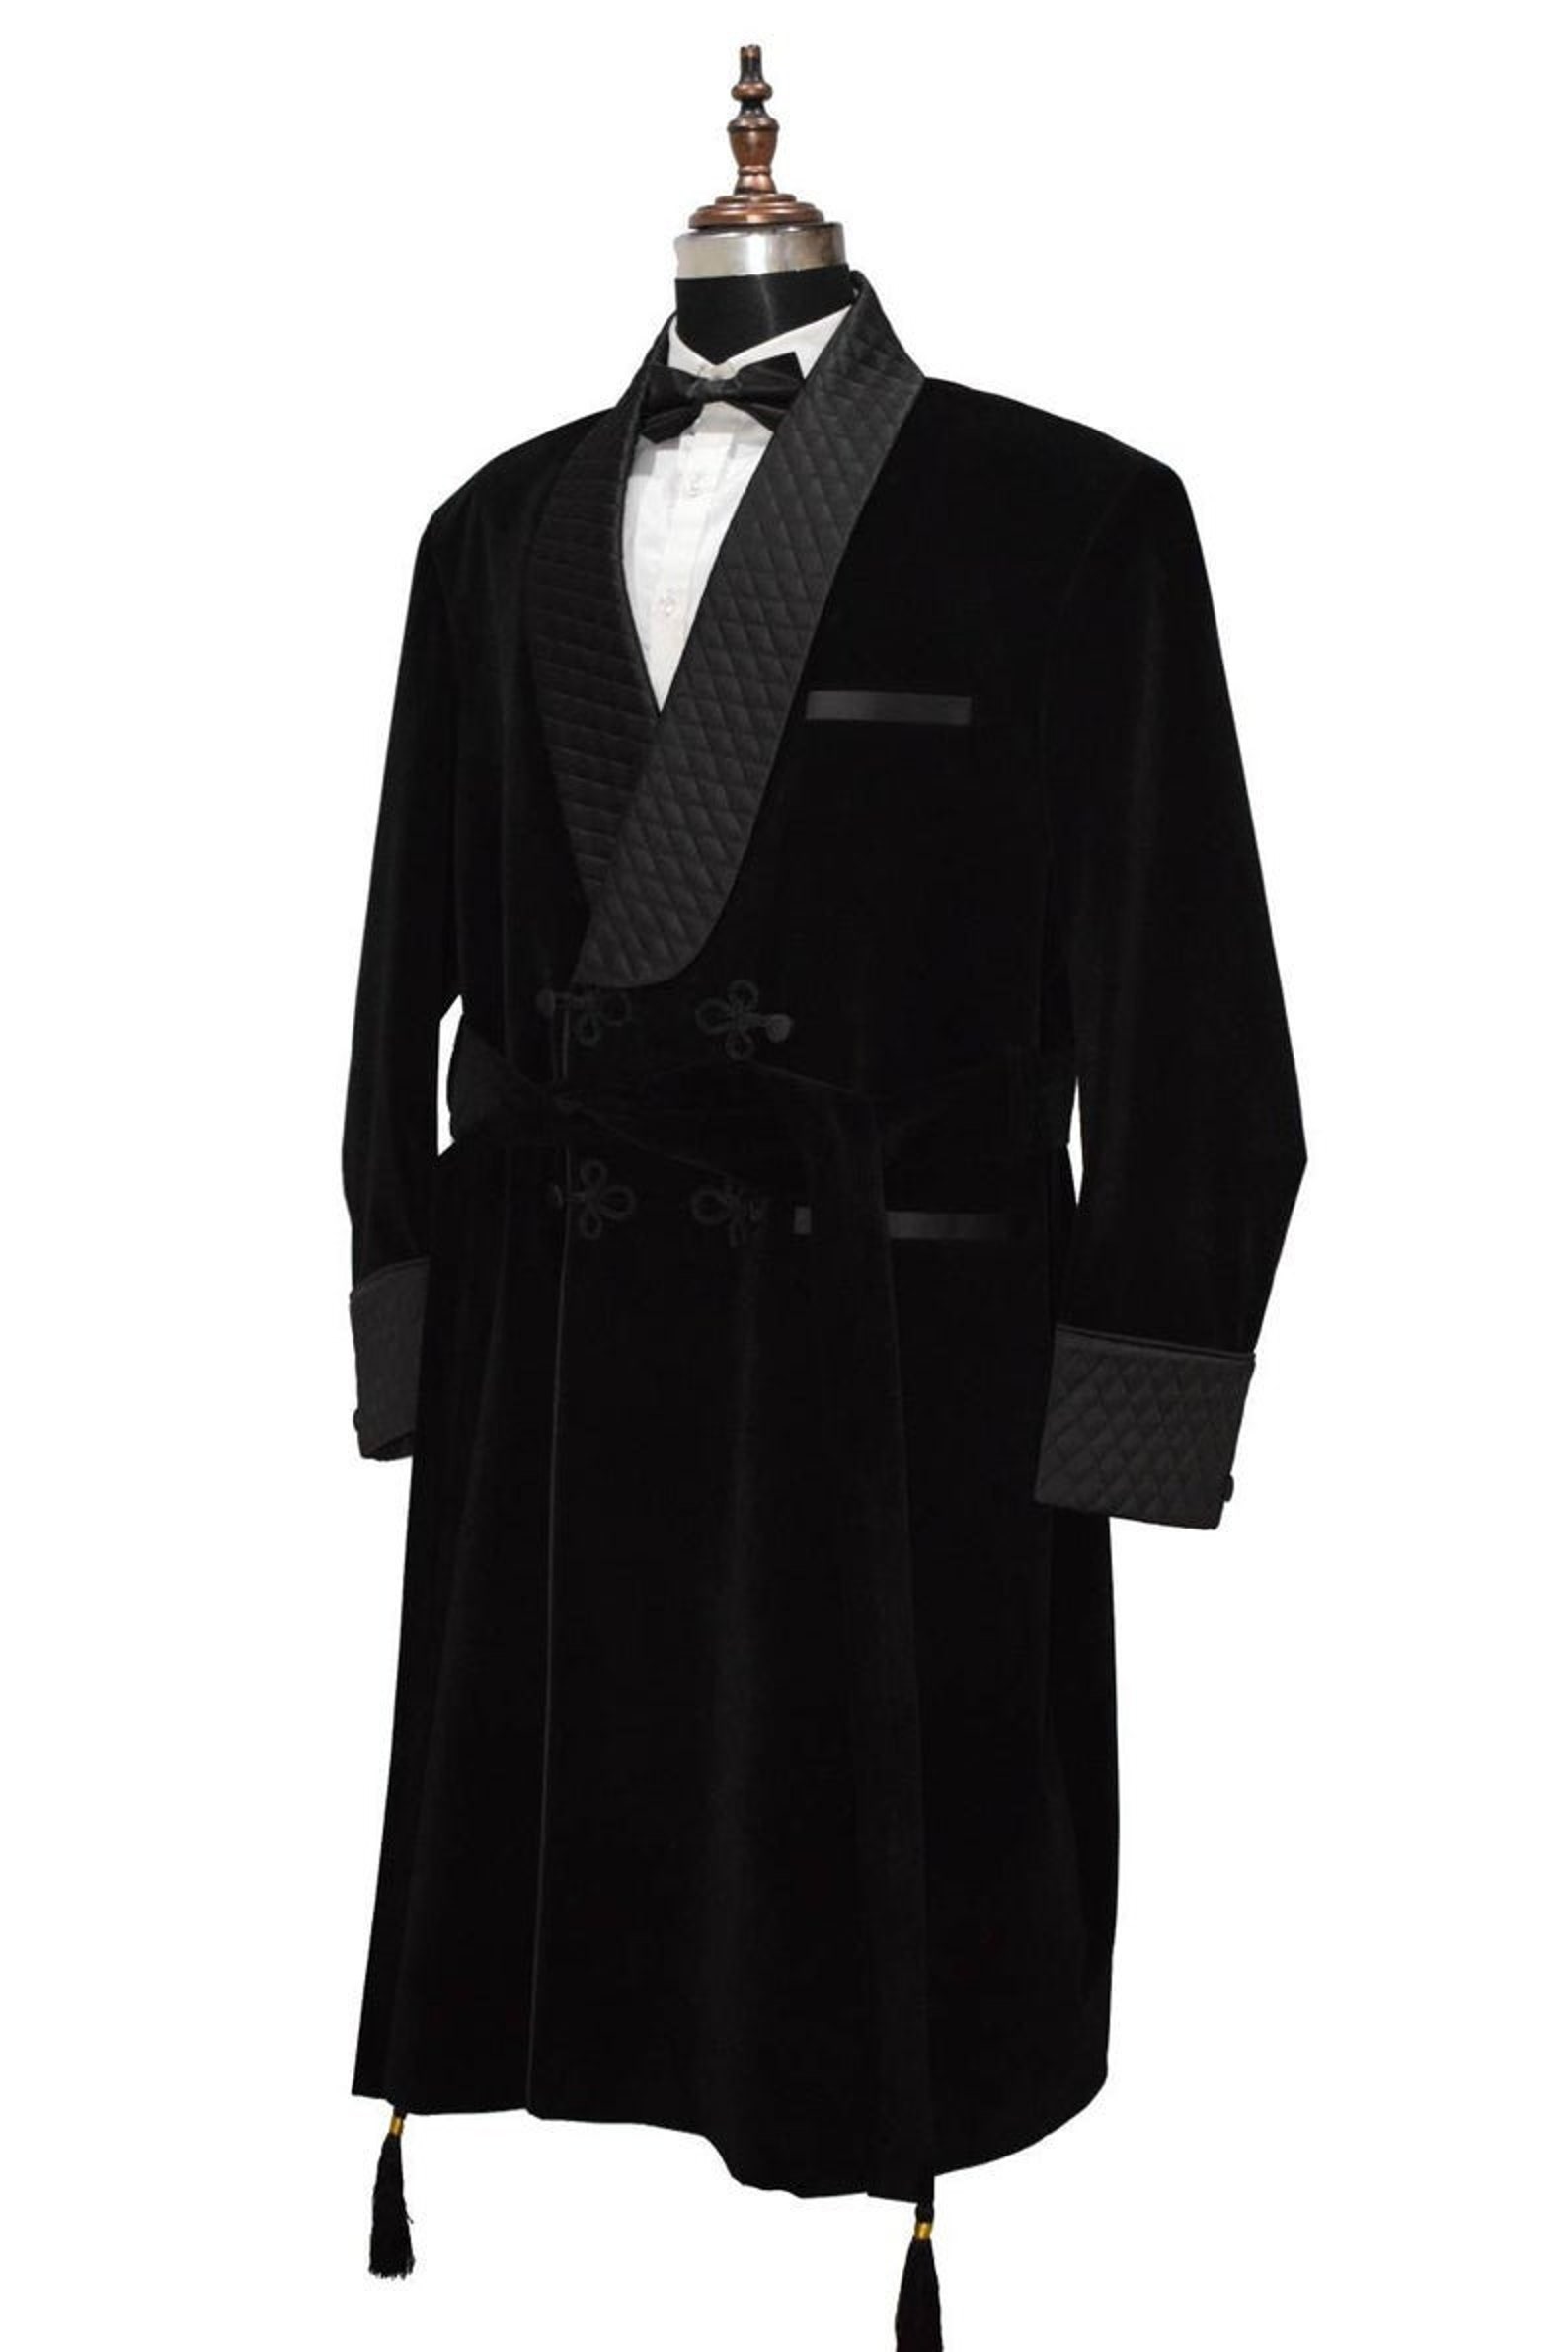 Men Smoking Jackets Long robe New Arrival for Elegant Hosting | Etsy